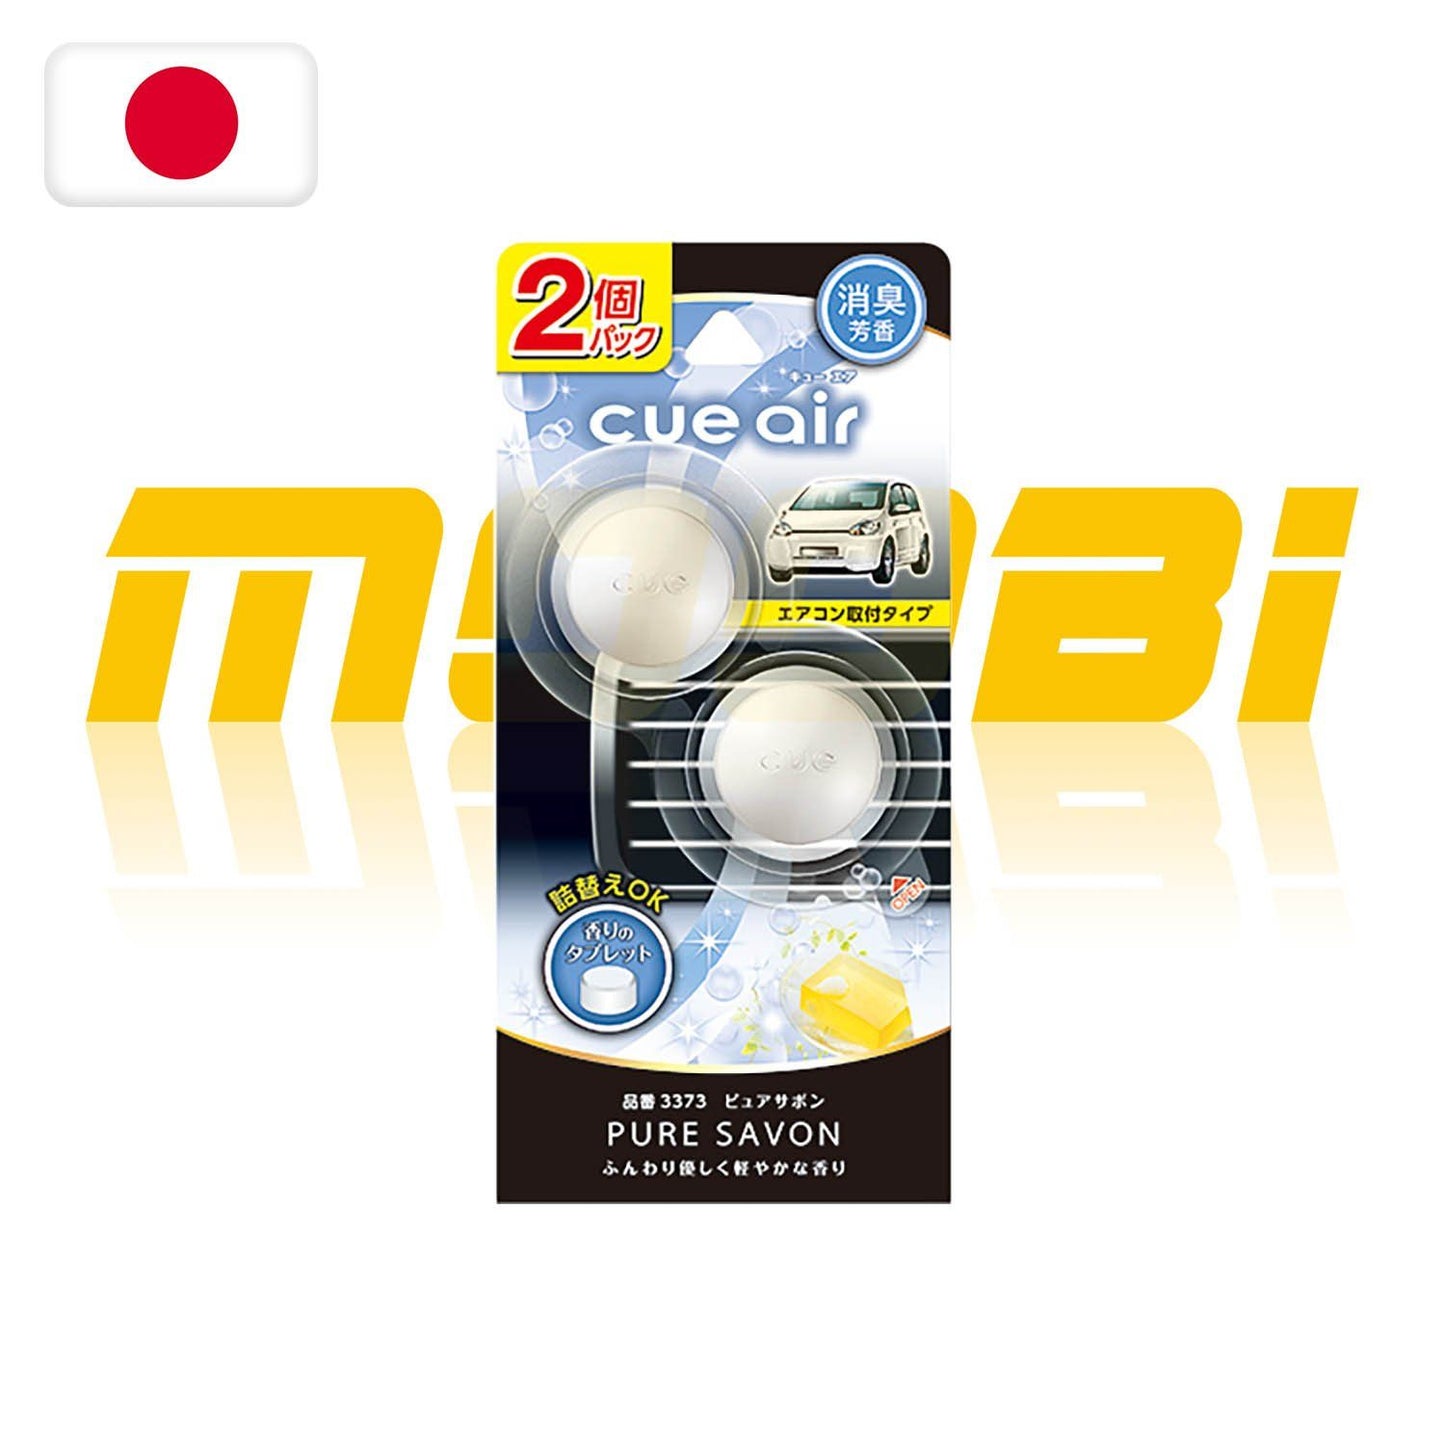 CARALL | Cue Air 香球 孖裝 Twin Pack | 日本製 | MOOBI 香港網上汽車用品專門店 p12